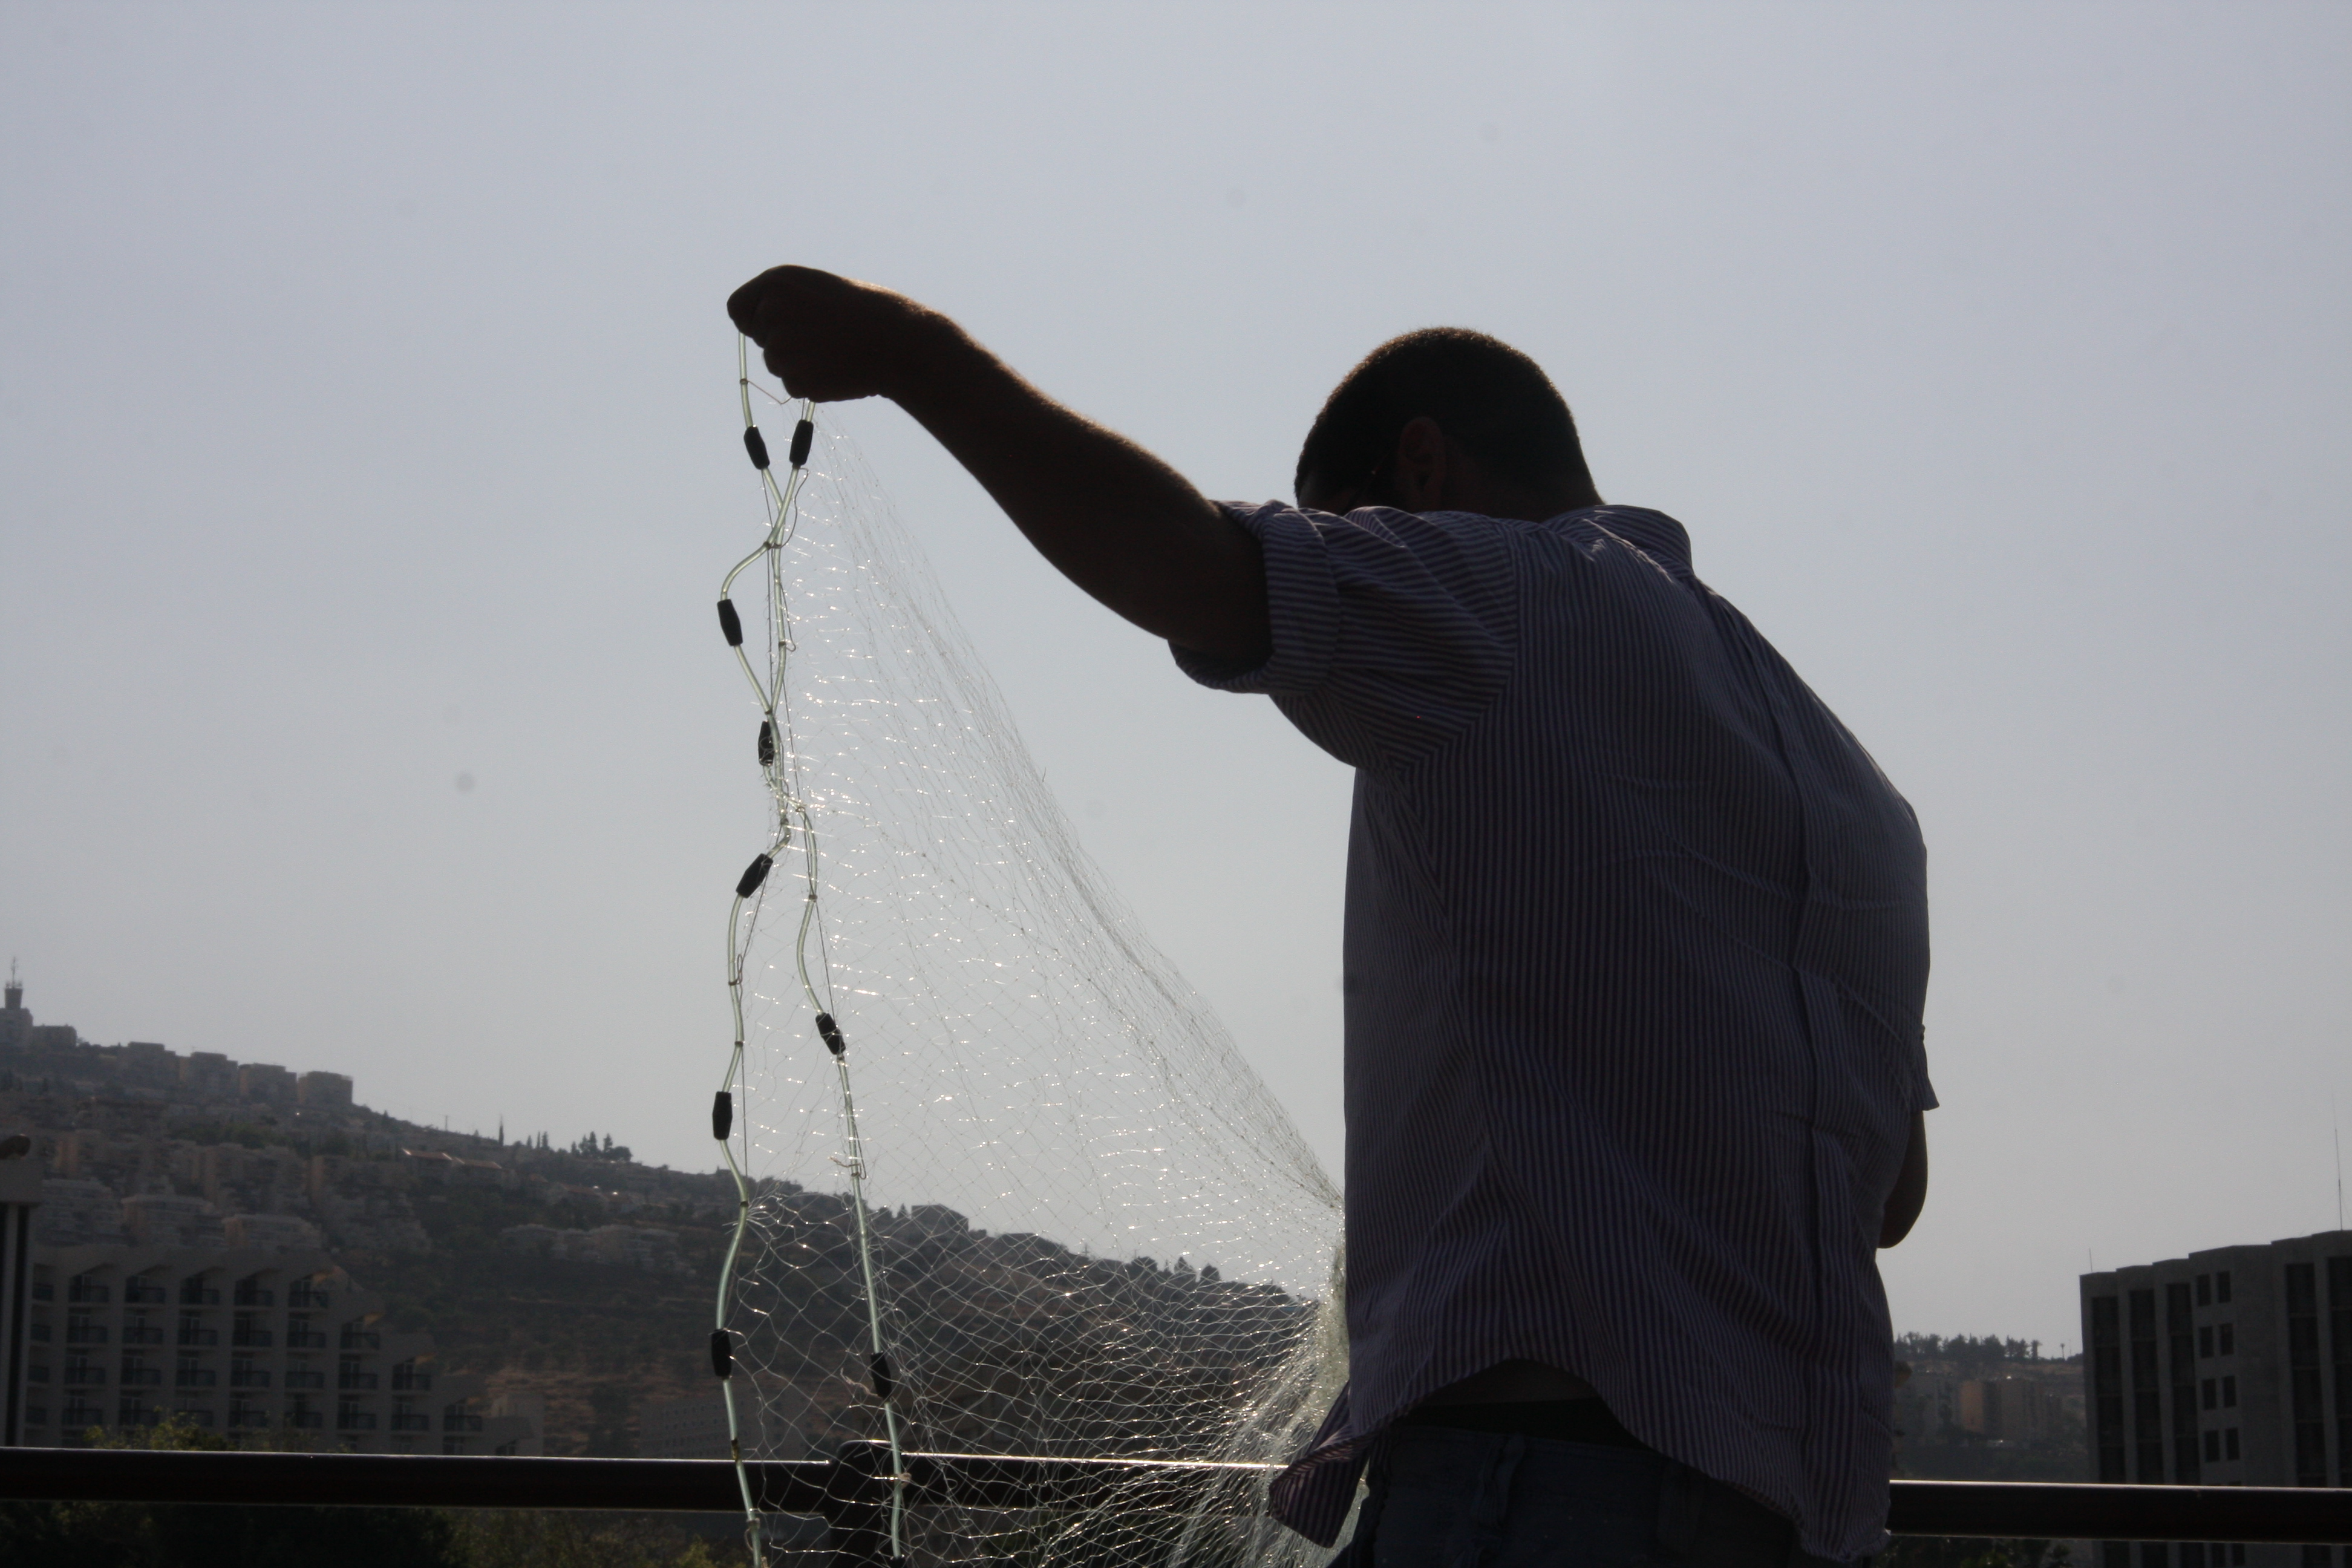 fisherman checking his net